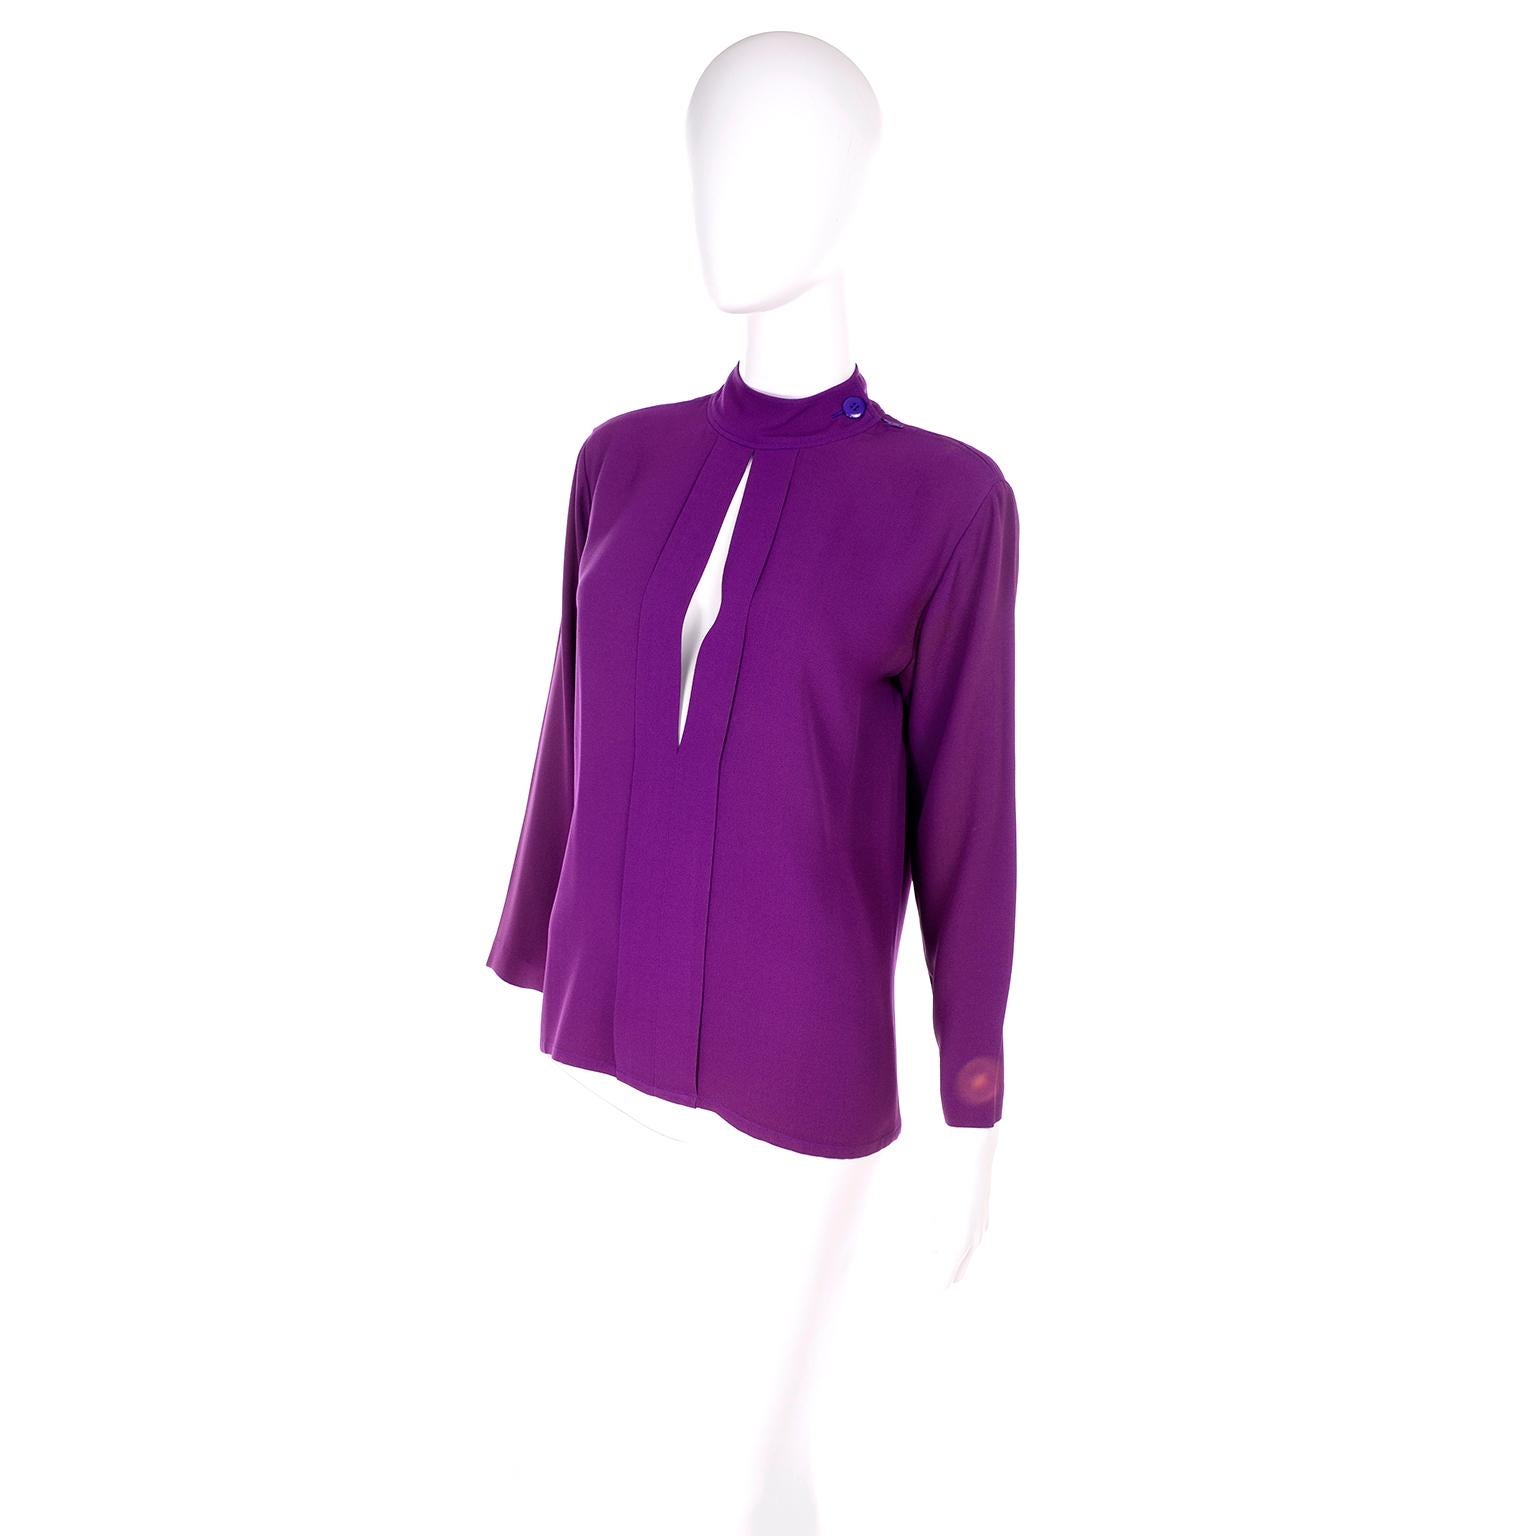 Yves Saint Laurent Vintage Purple Silk Crepe Top With Peek a Boo Cutout 1